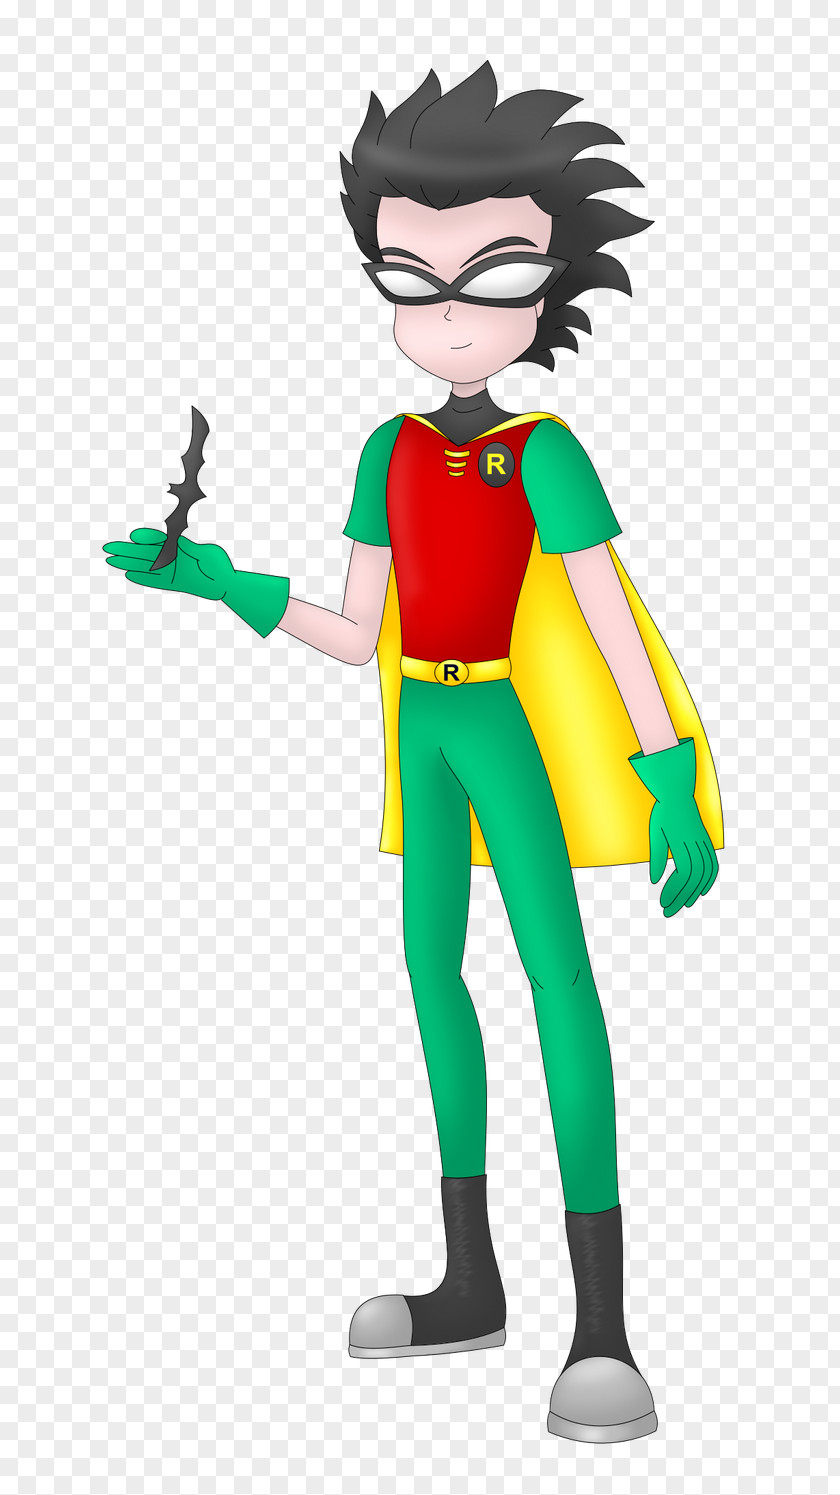 Teen Titans Robin Illustration Cartoon Superhero Visual Perception Legendary Creature PNG